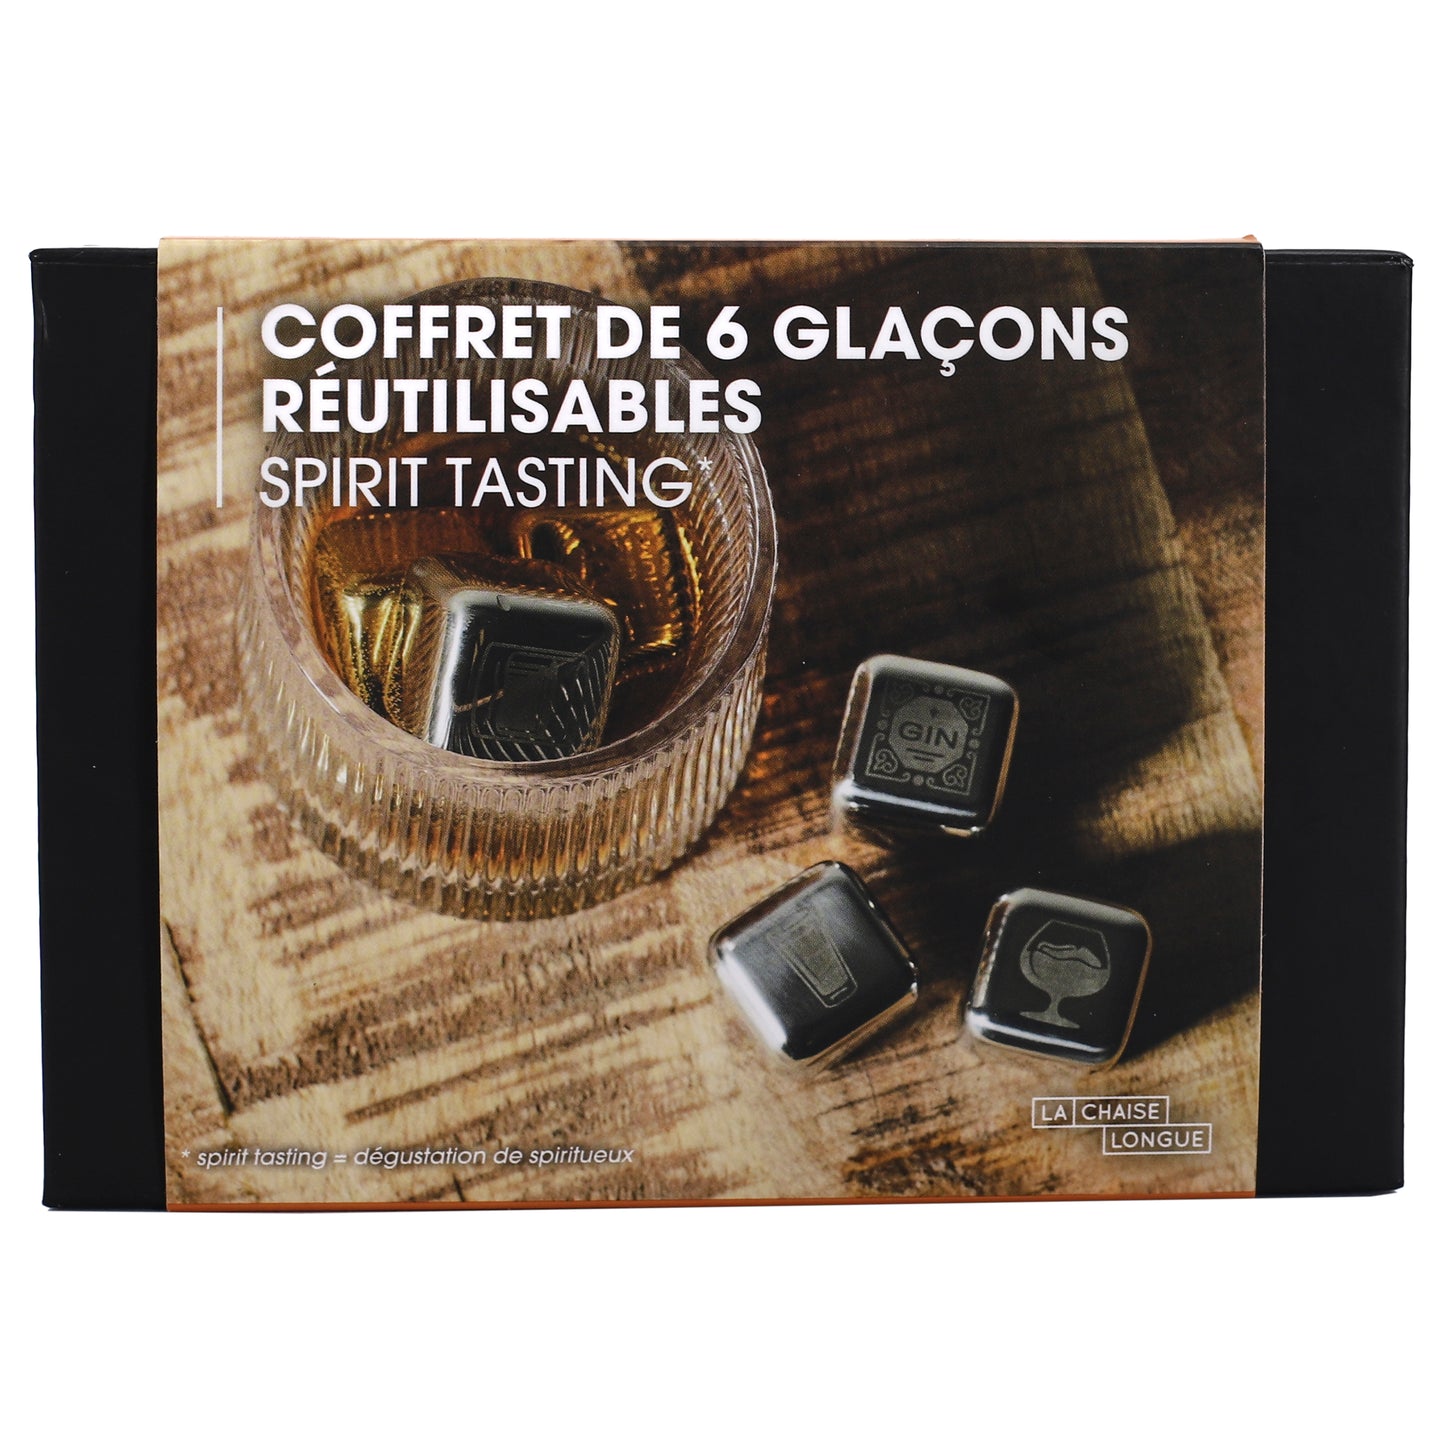 COFFRET DE 6 GLACONS SPIRIT TASTING